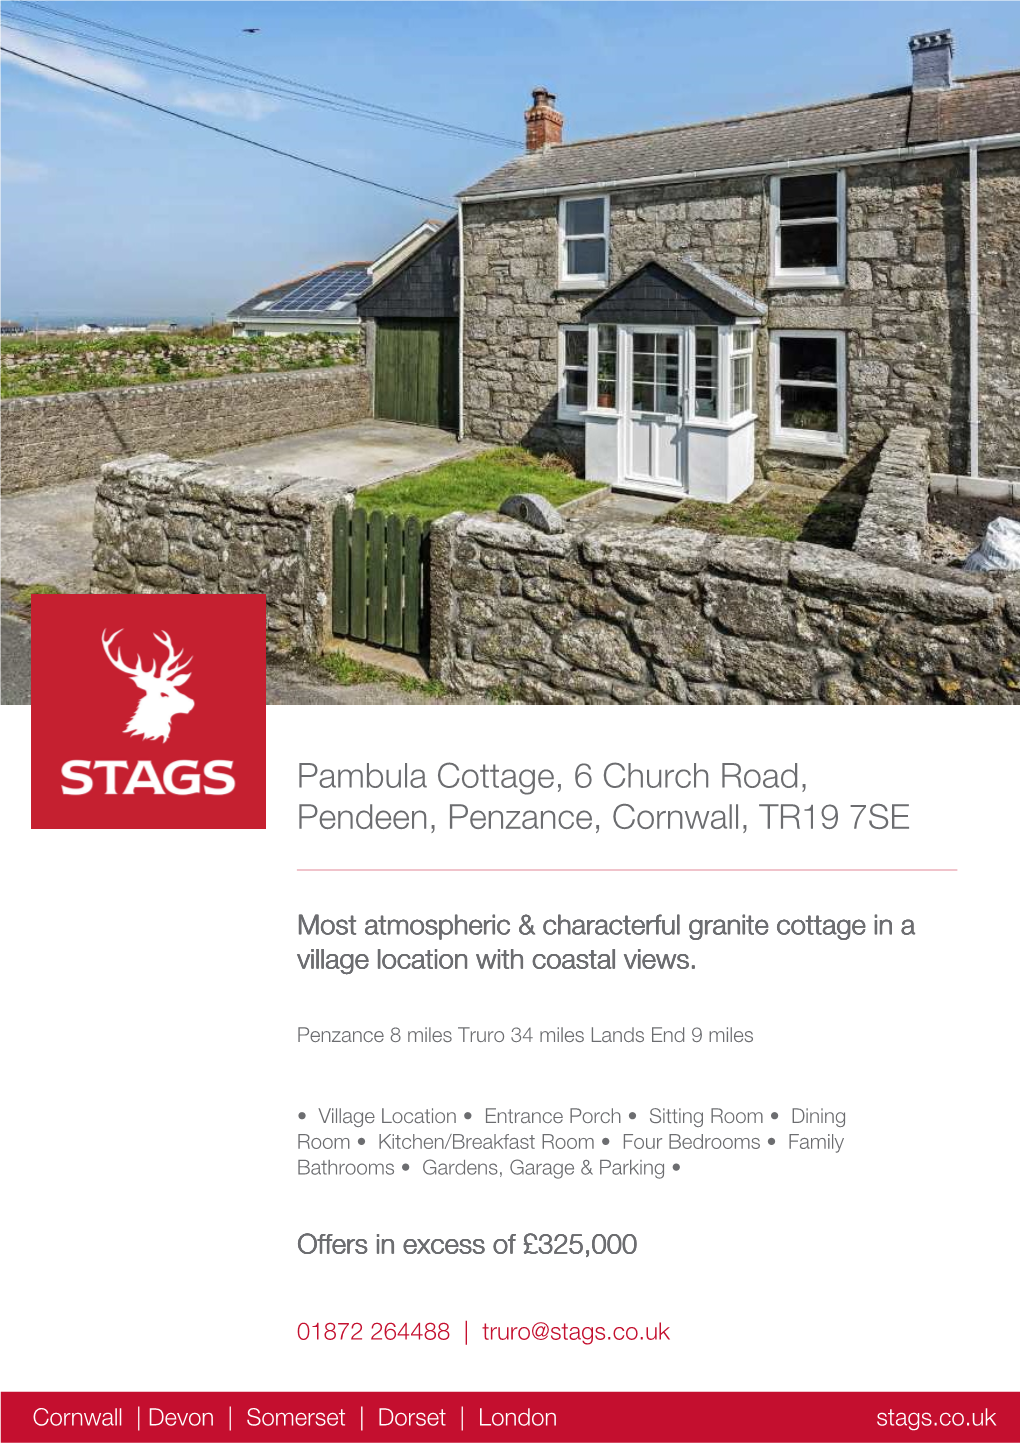 Pambula Cottage, 6 Church Road, Pendeen, Penzance, Cornwall, TR19 7SE